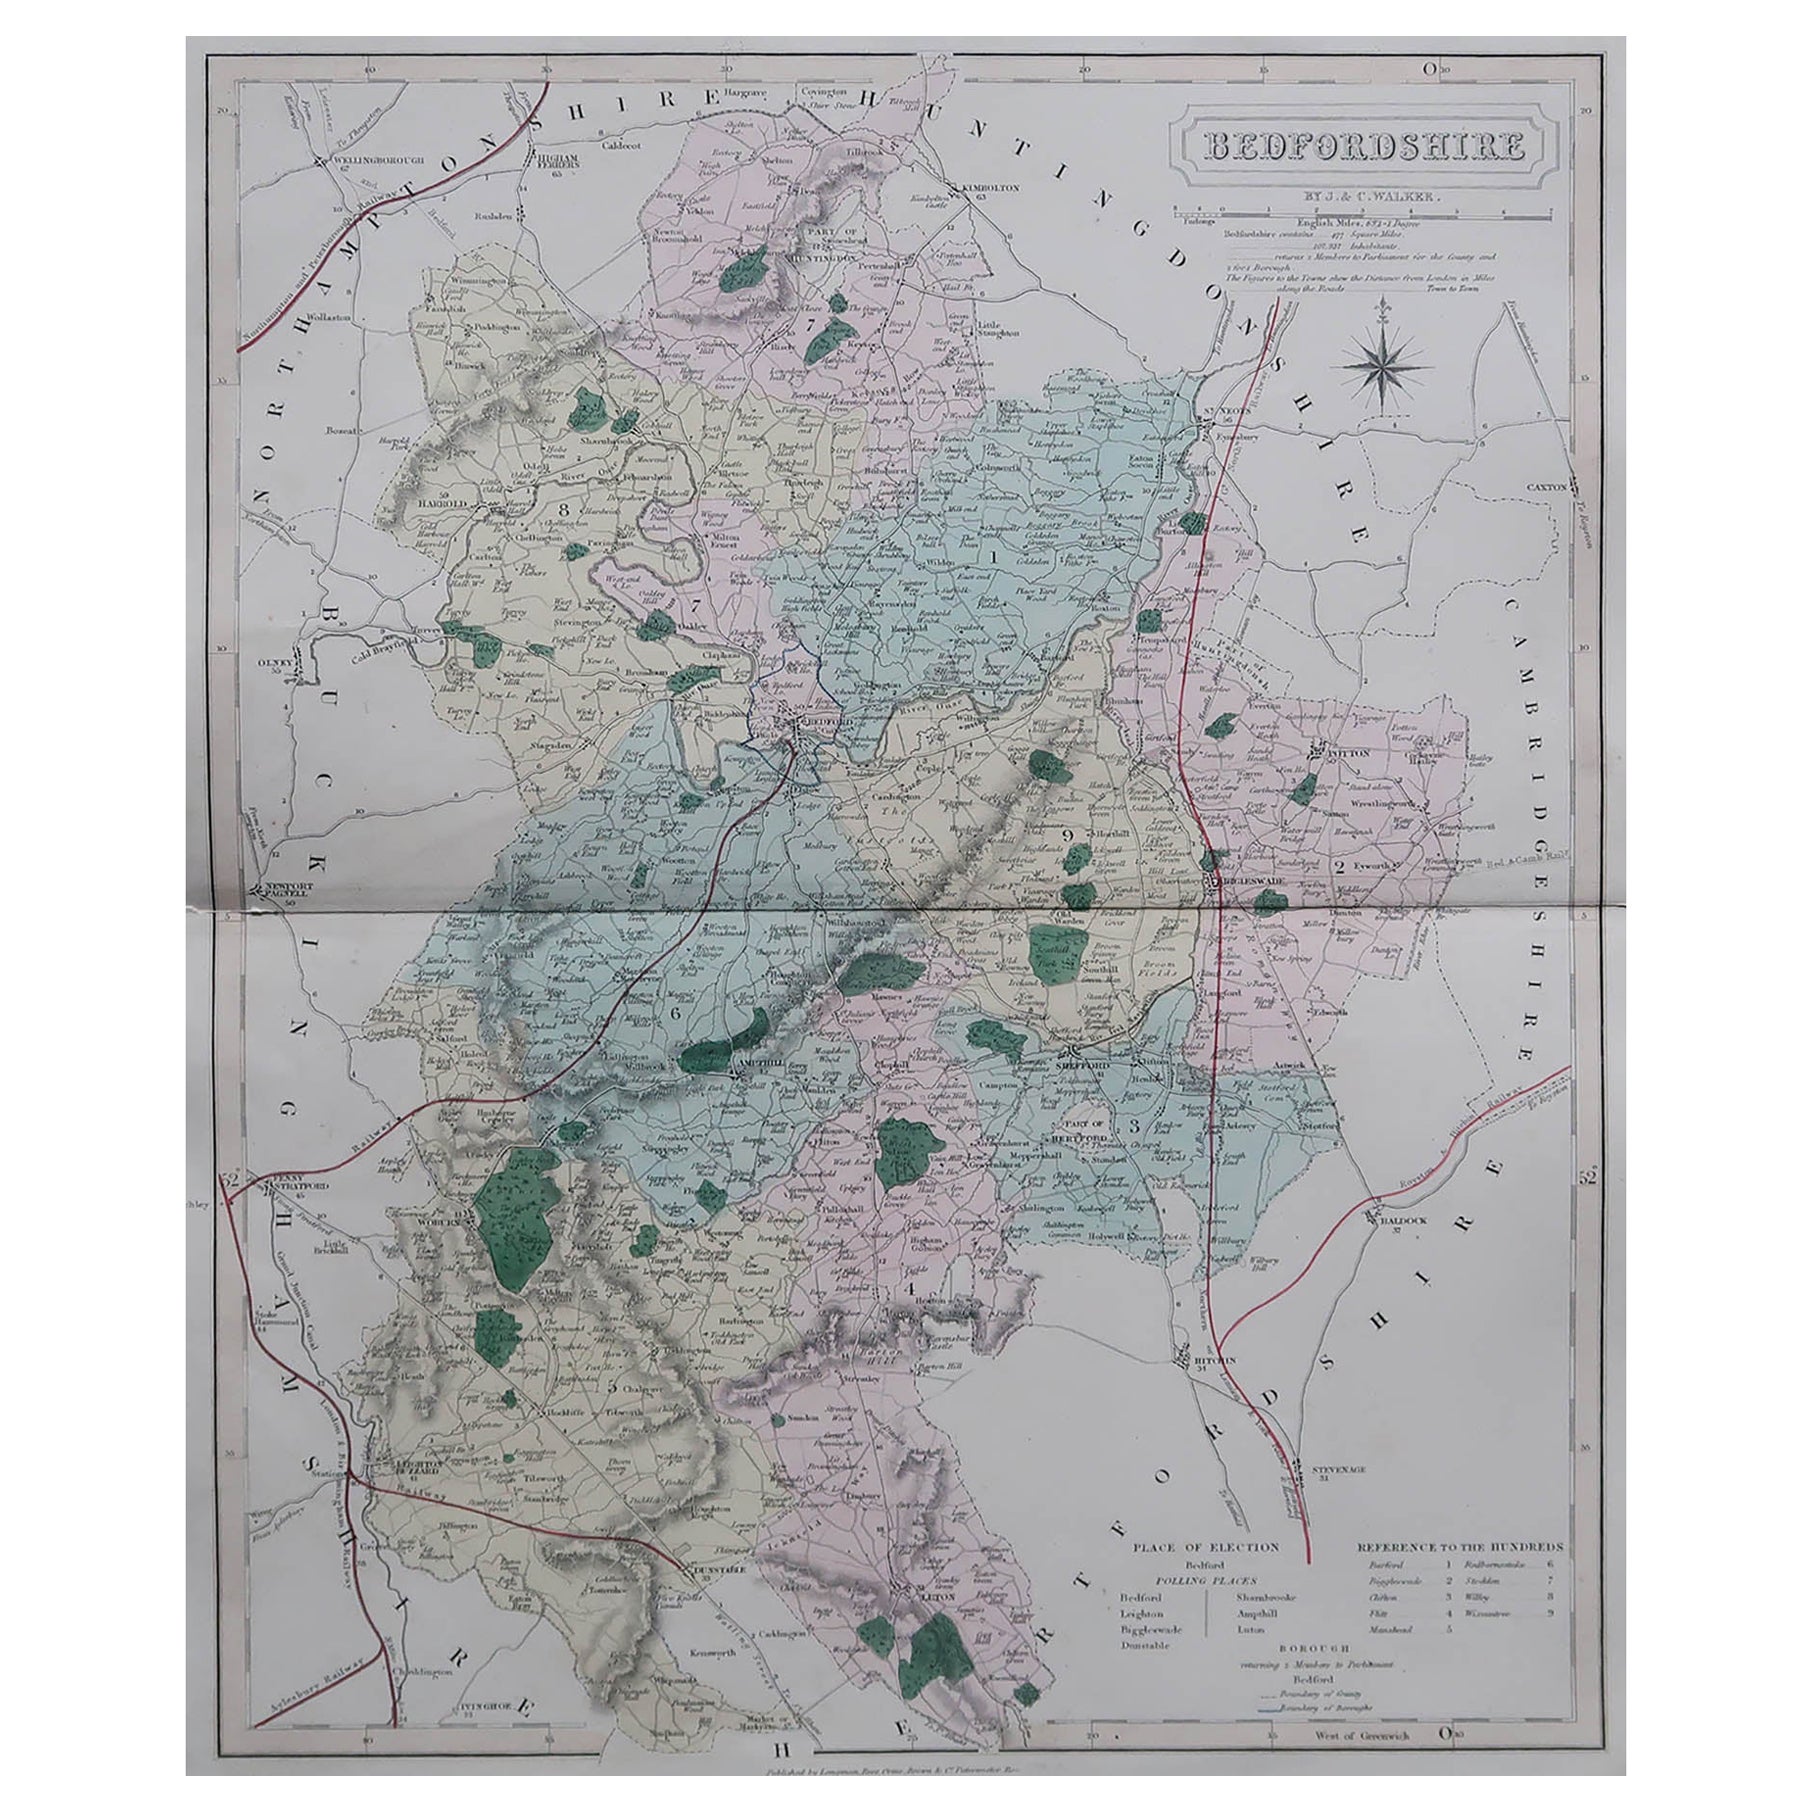 Original Antique English County Map, Bedfordshire. J & C Walker. 1851